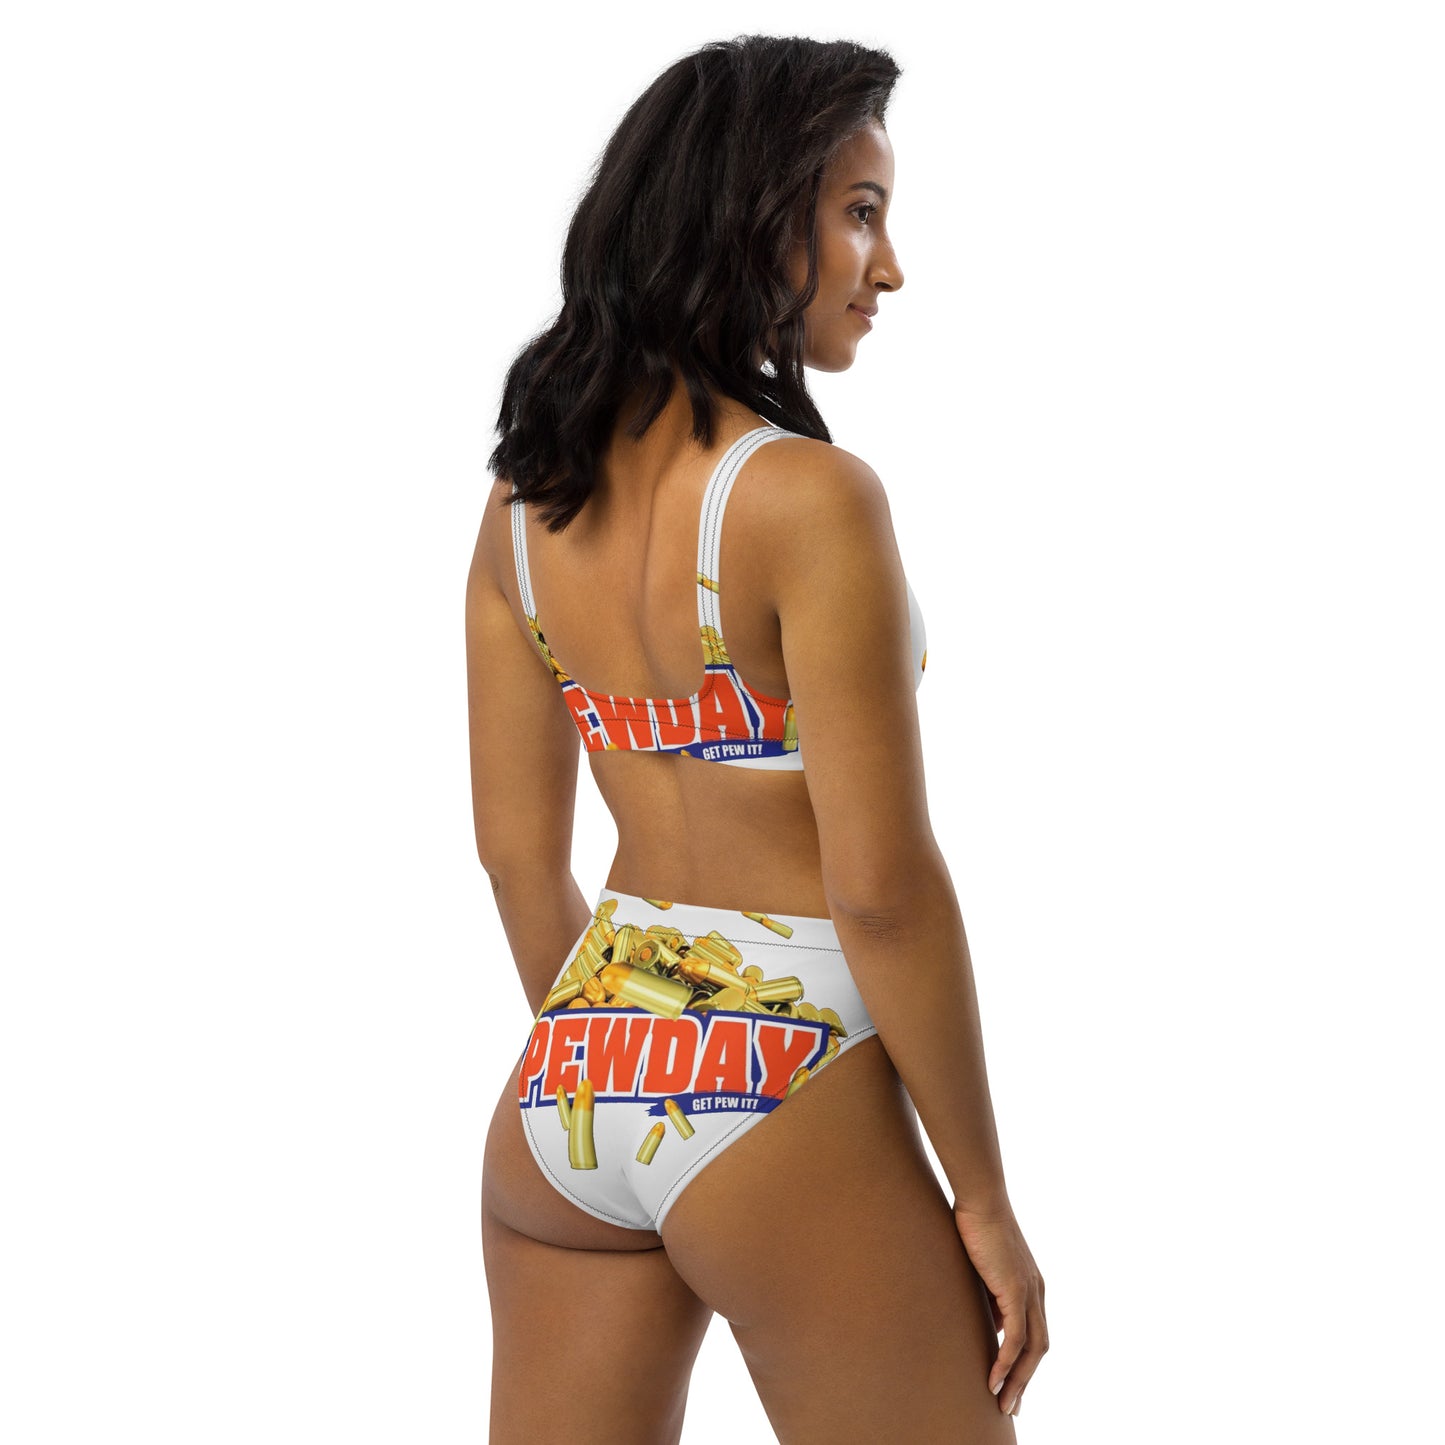 PEWDAY CANDY Recycled high-waisted bikini